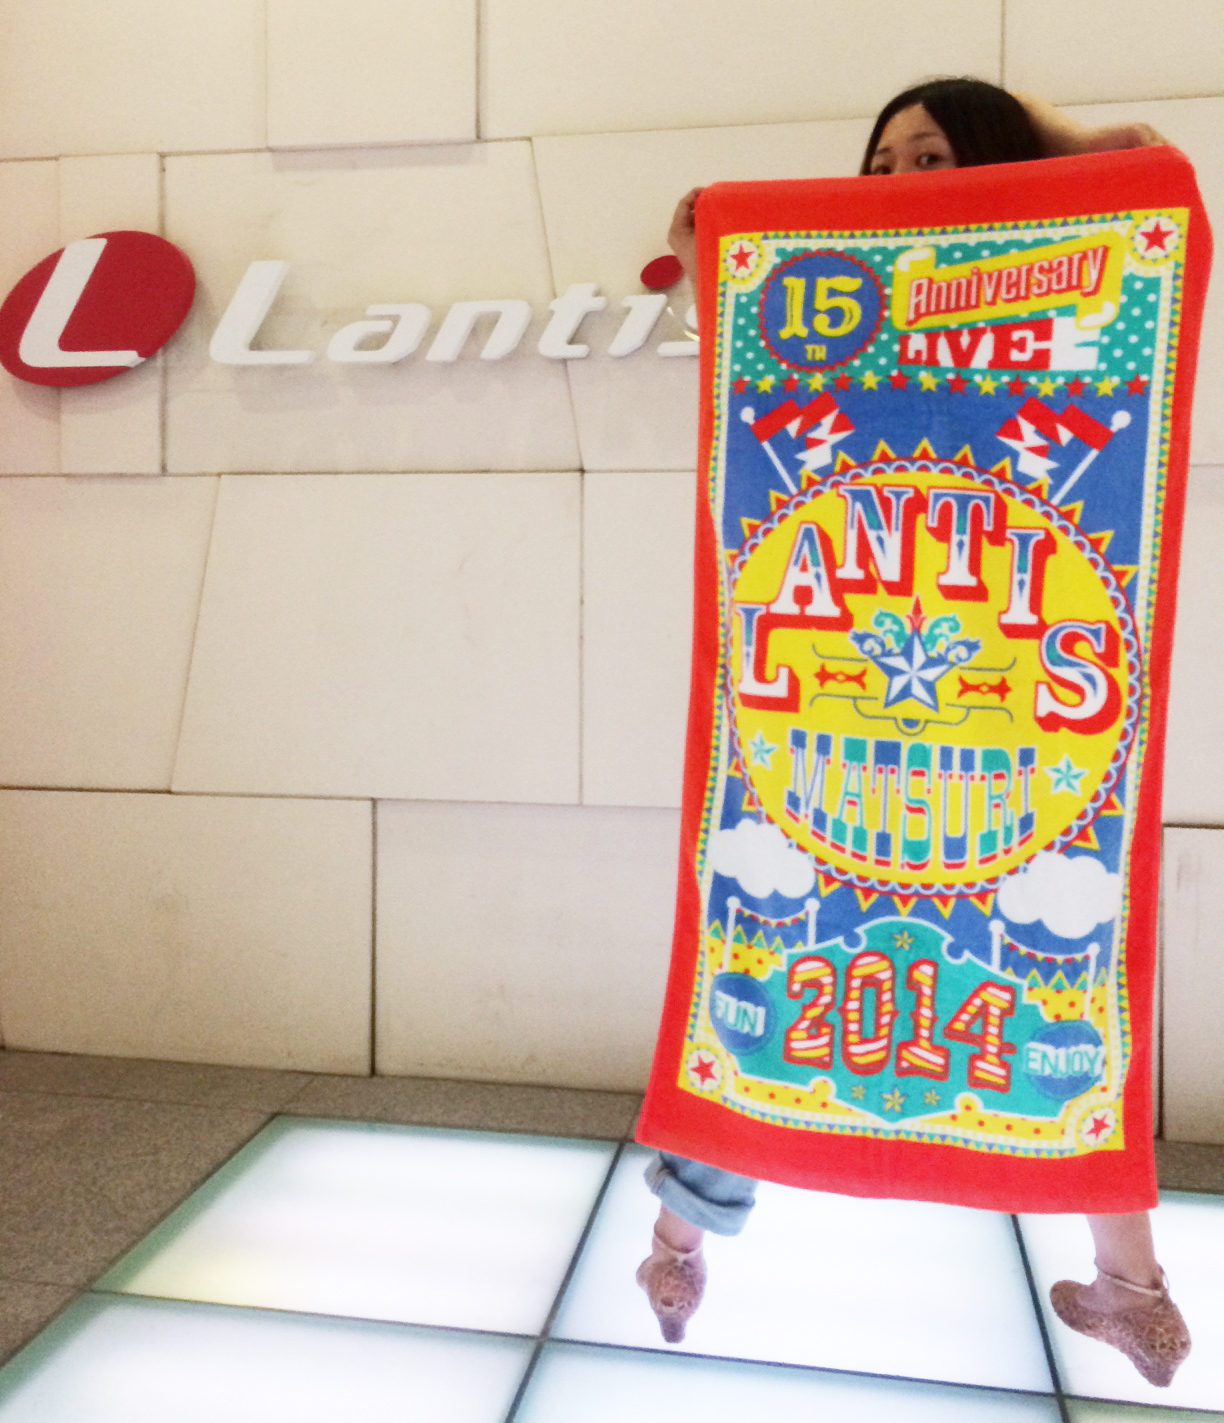 http://www.lantis.jp/15th/staffblog/2014/07/07/re%E5%86%99%E7%9C%9F%203.JPG